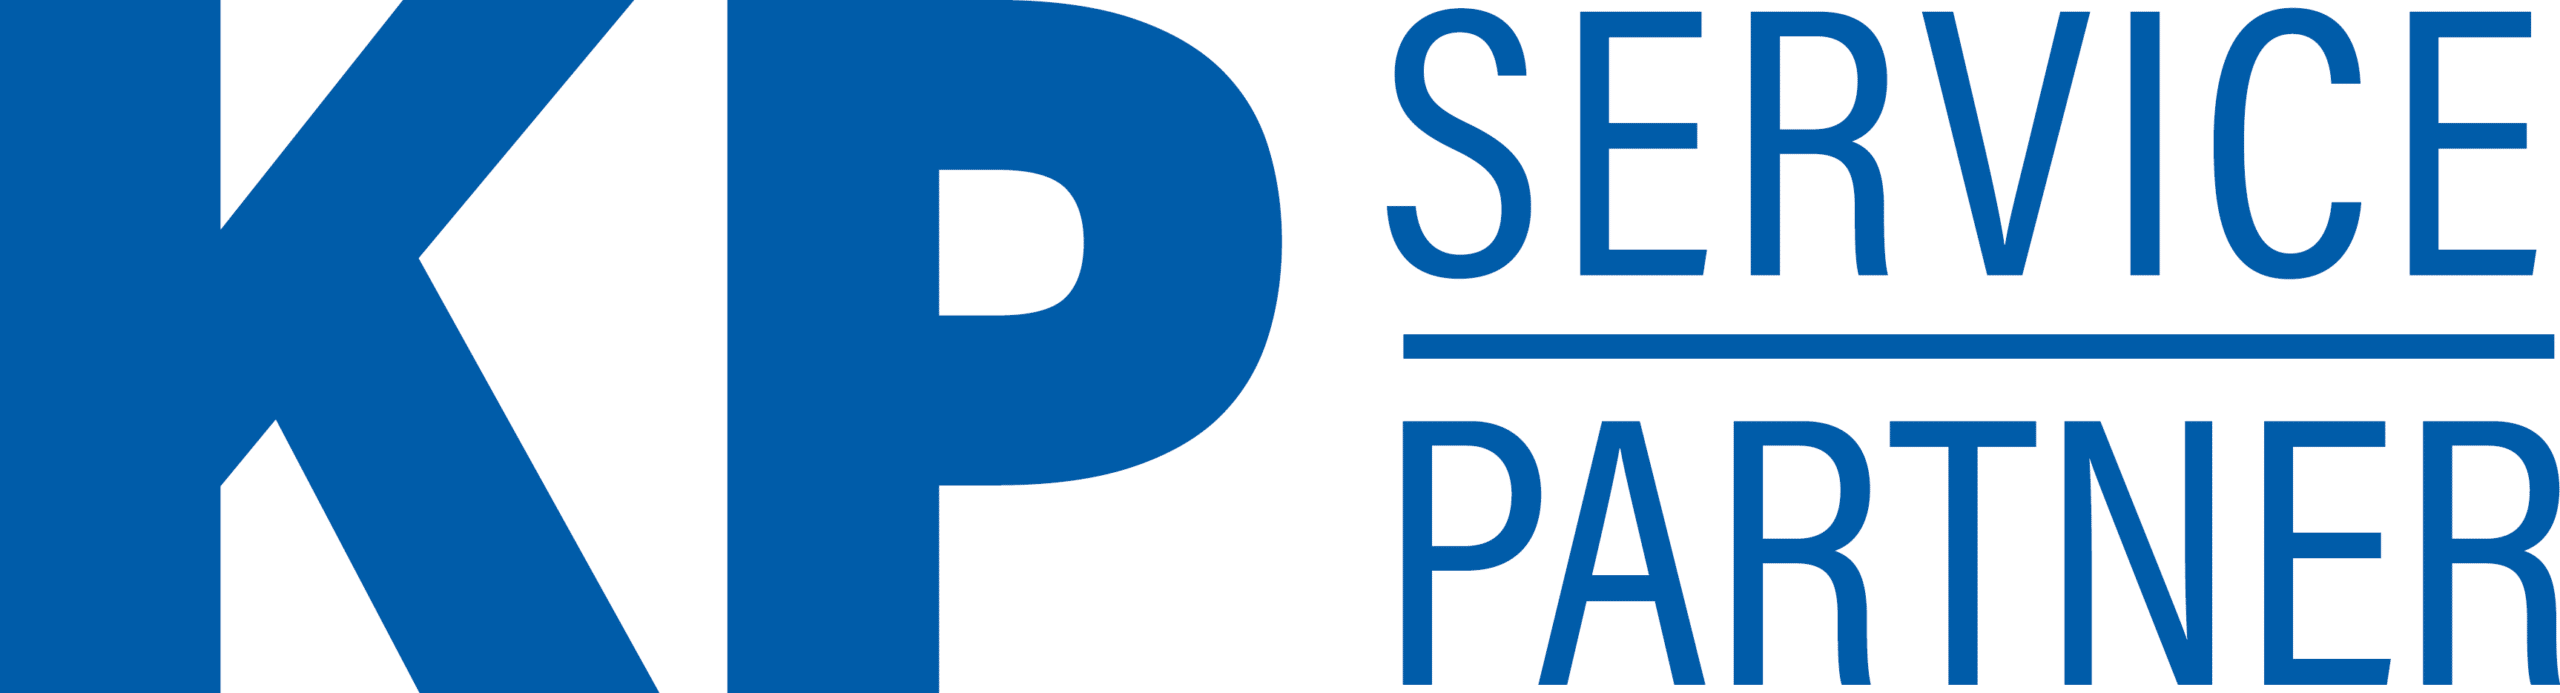 KP-ServicePartner